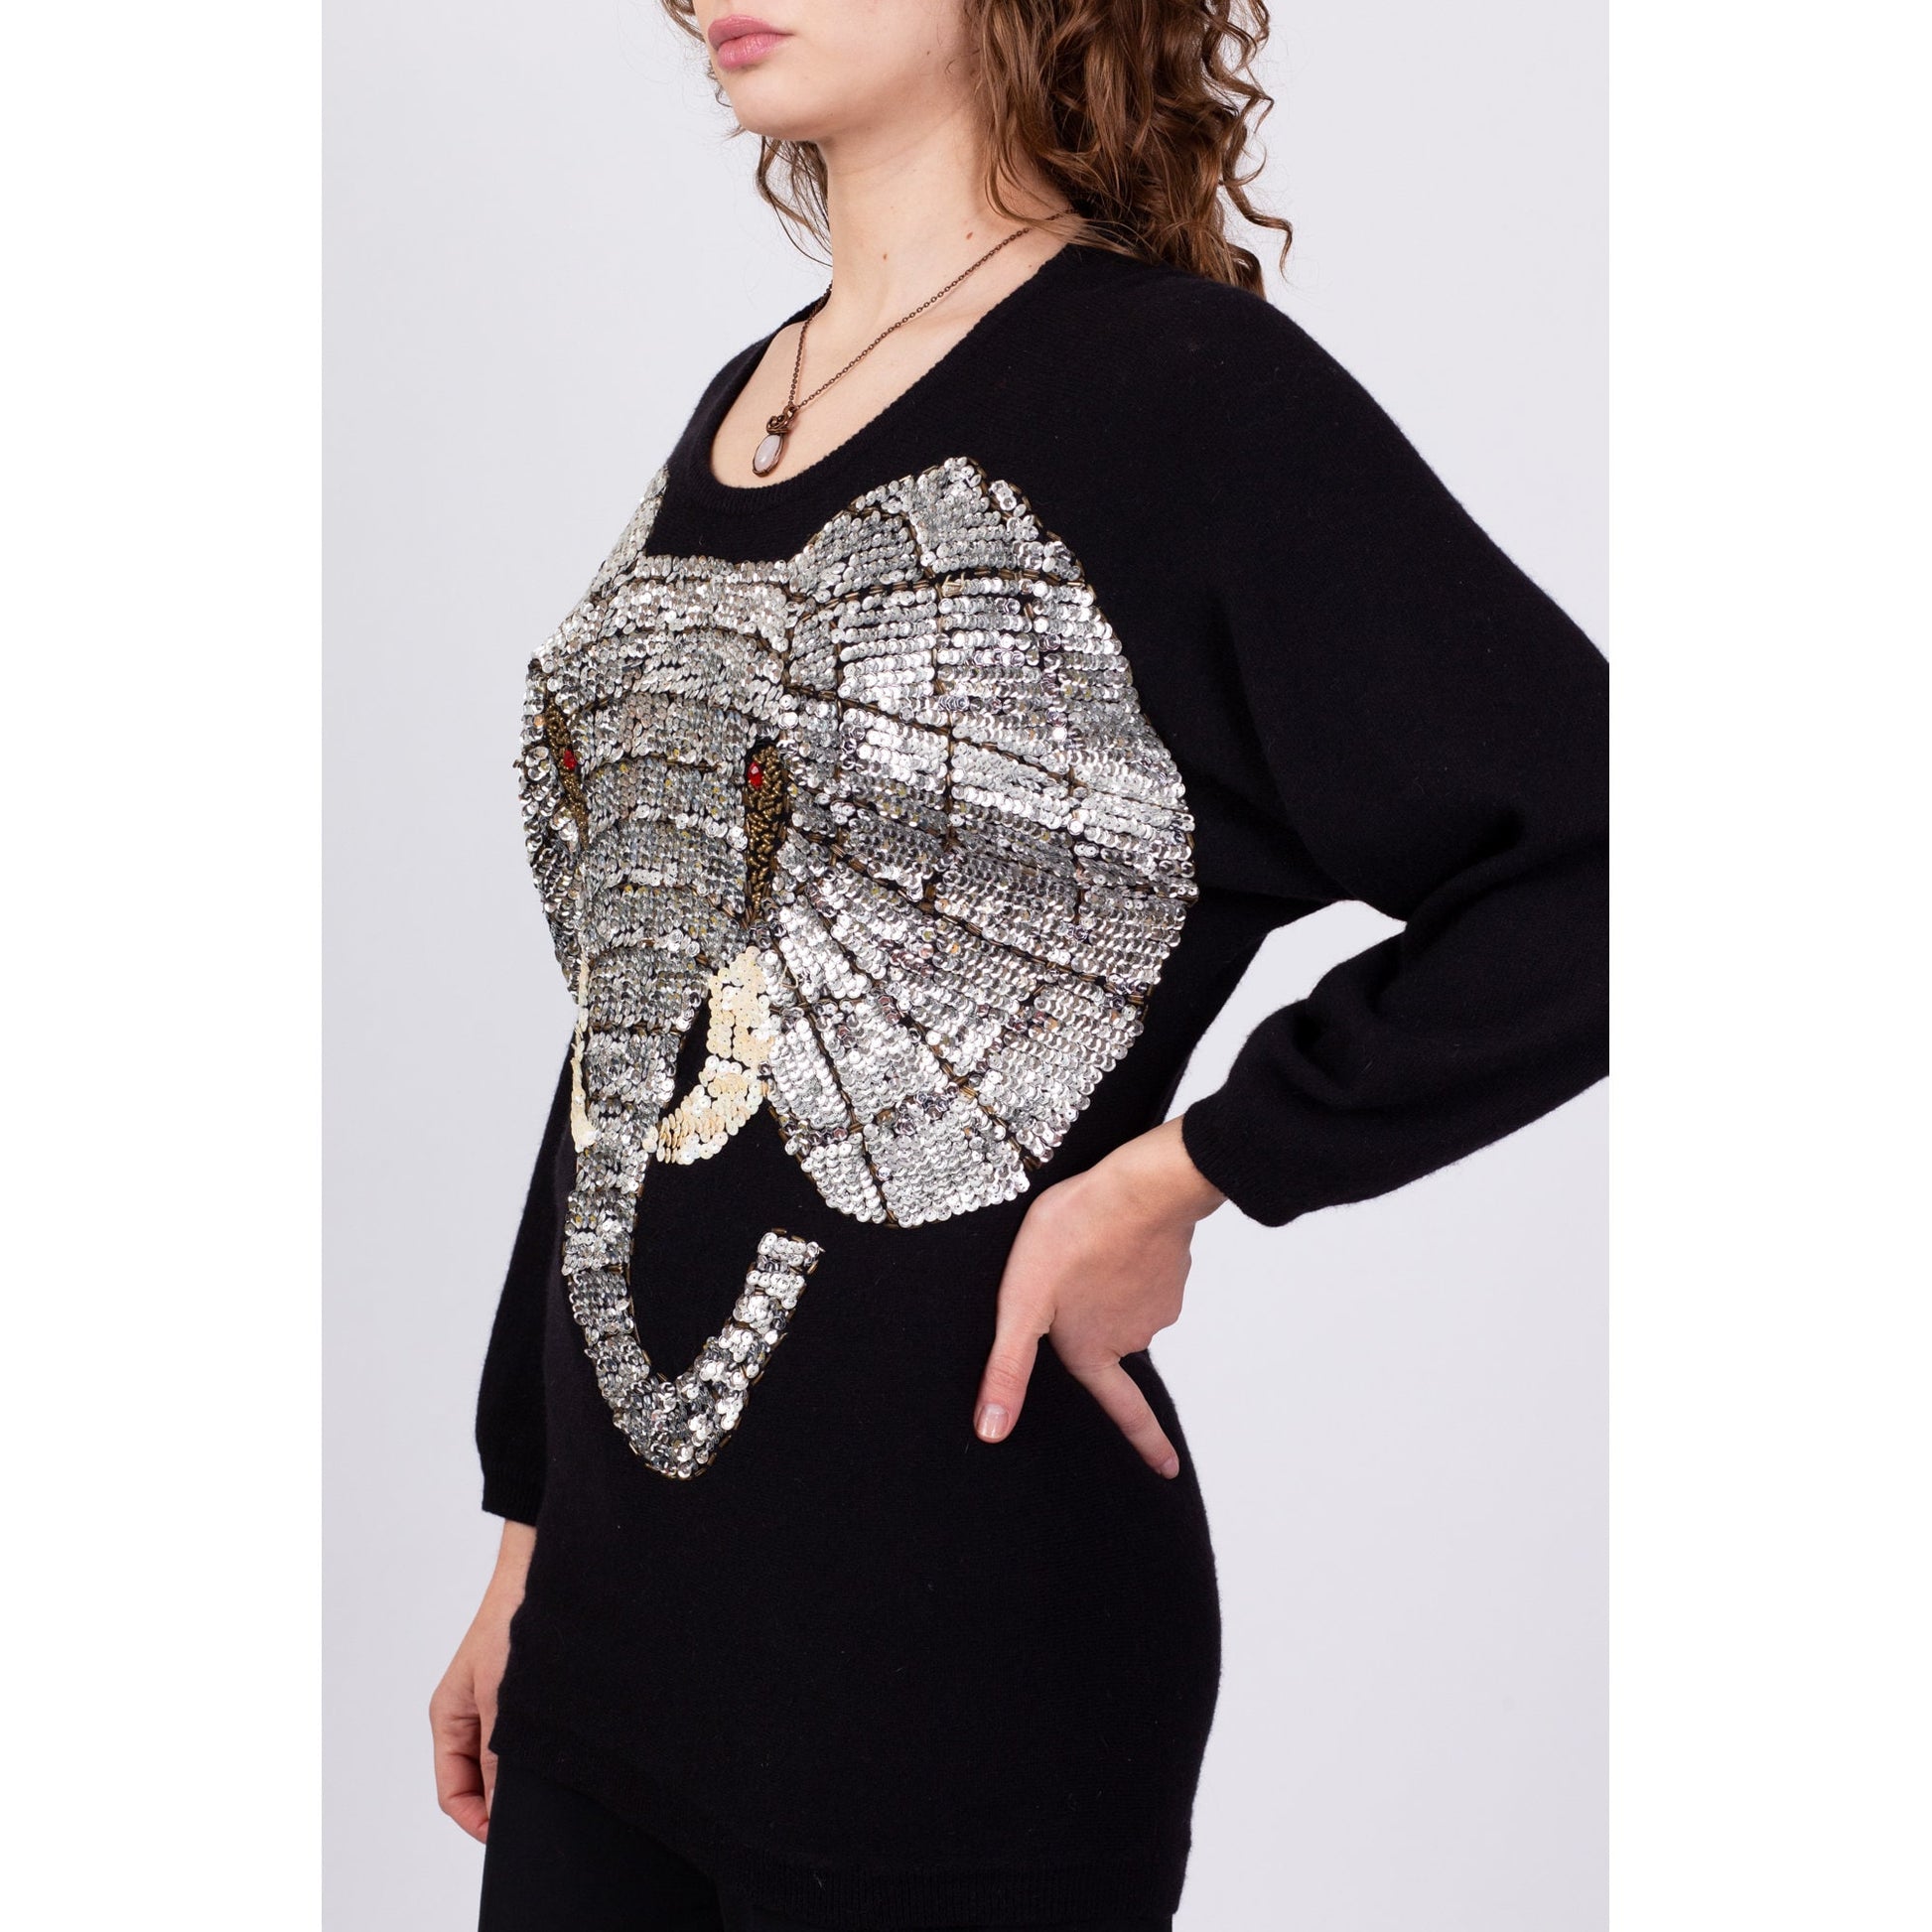 80s Black Angora Sequin Elephant Sweater - Small to Medium 